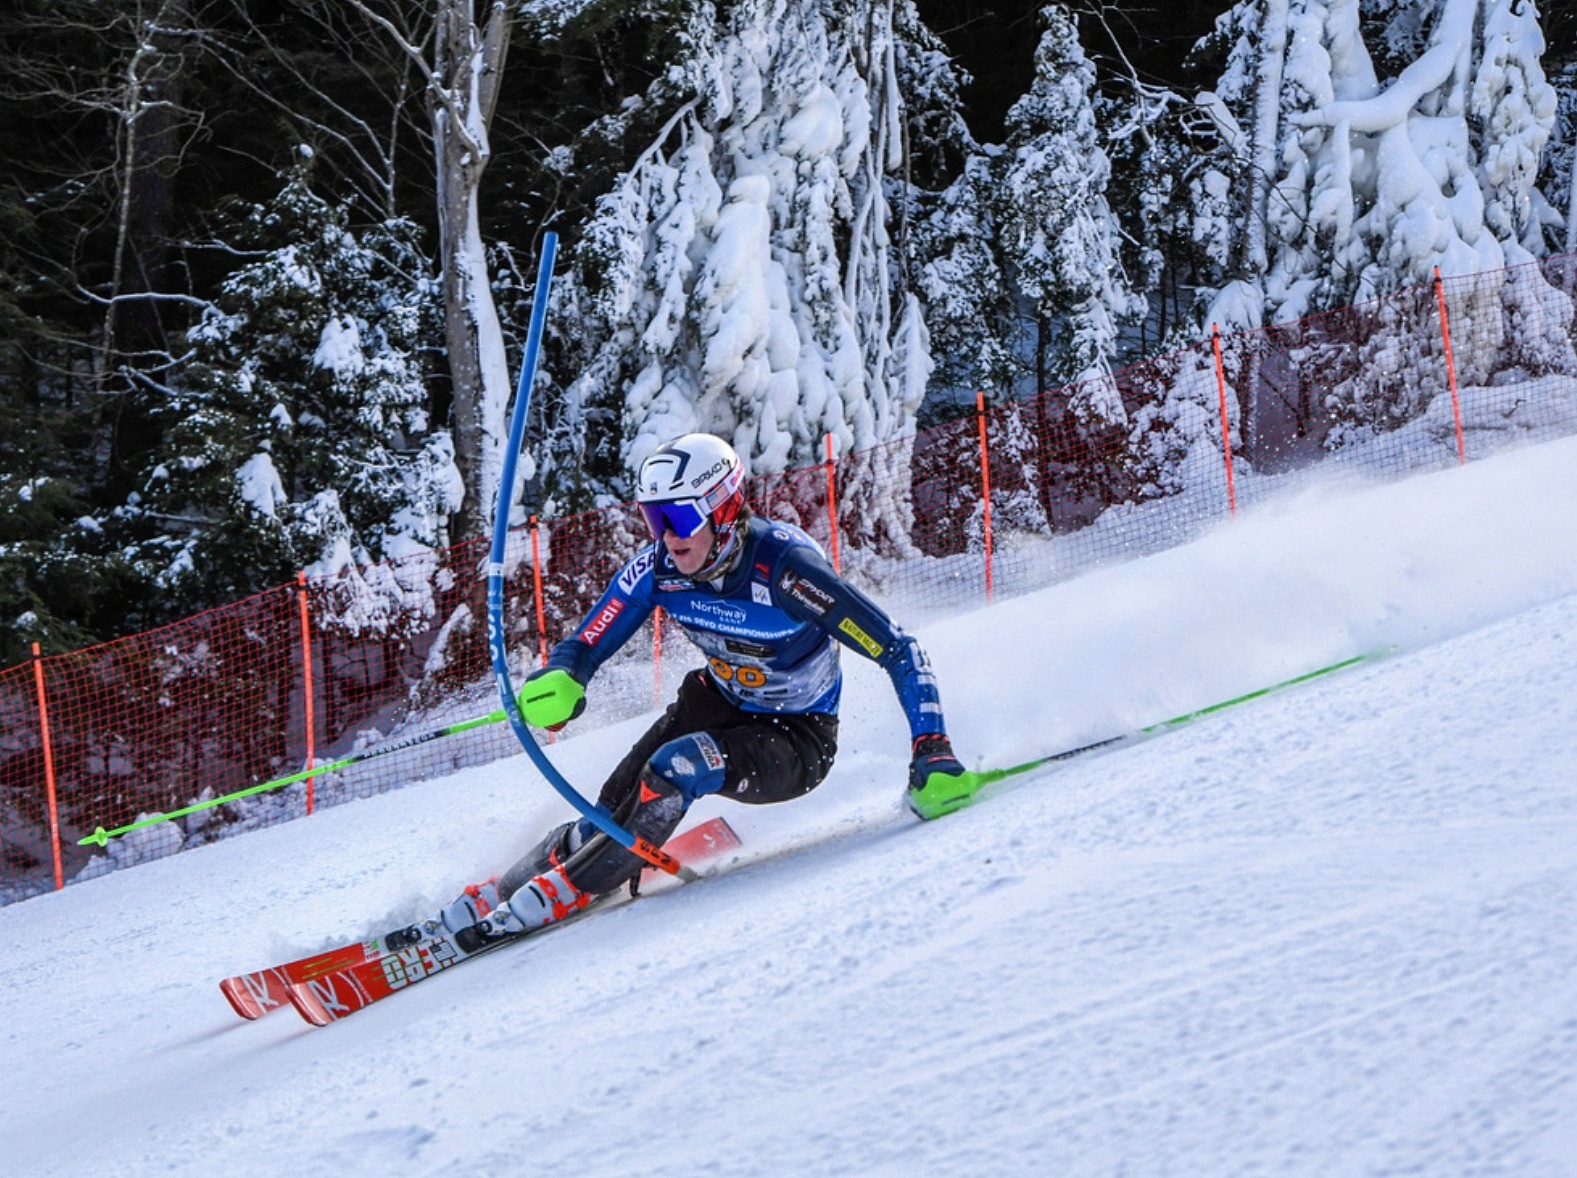 Proctor Academy USSA/FIS Alpine Ski Racing